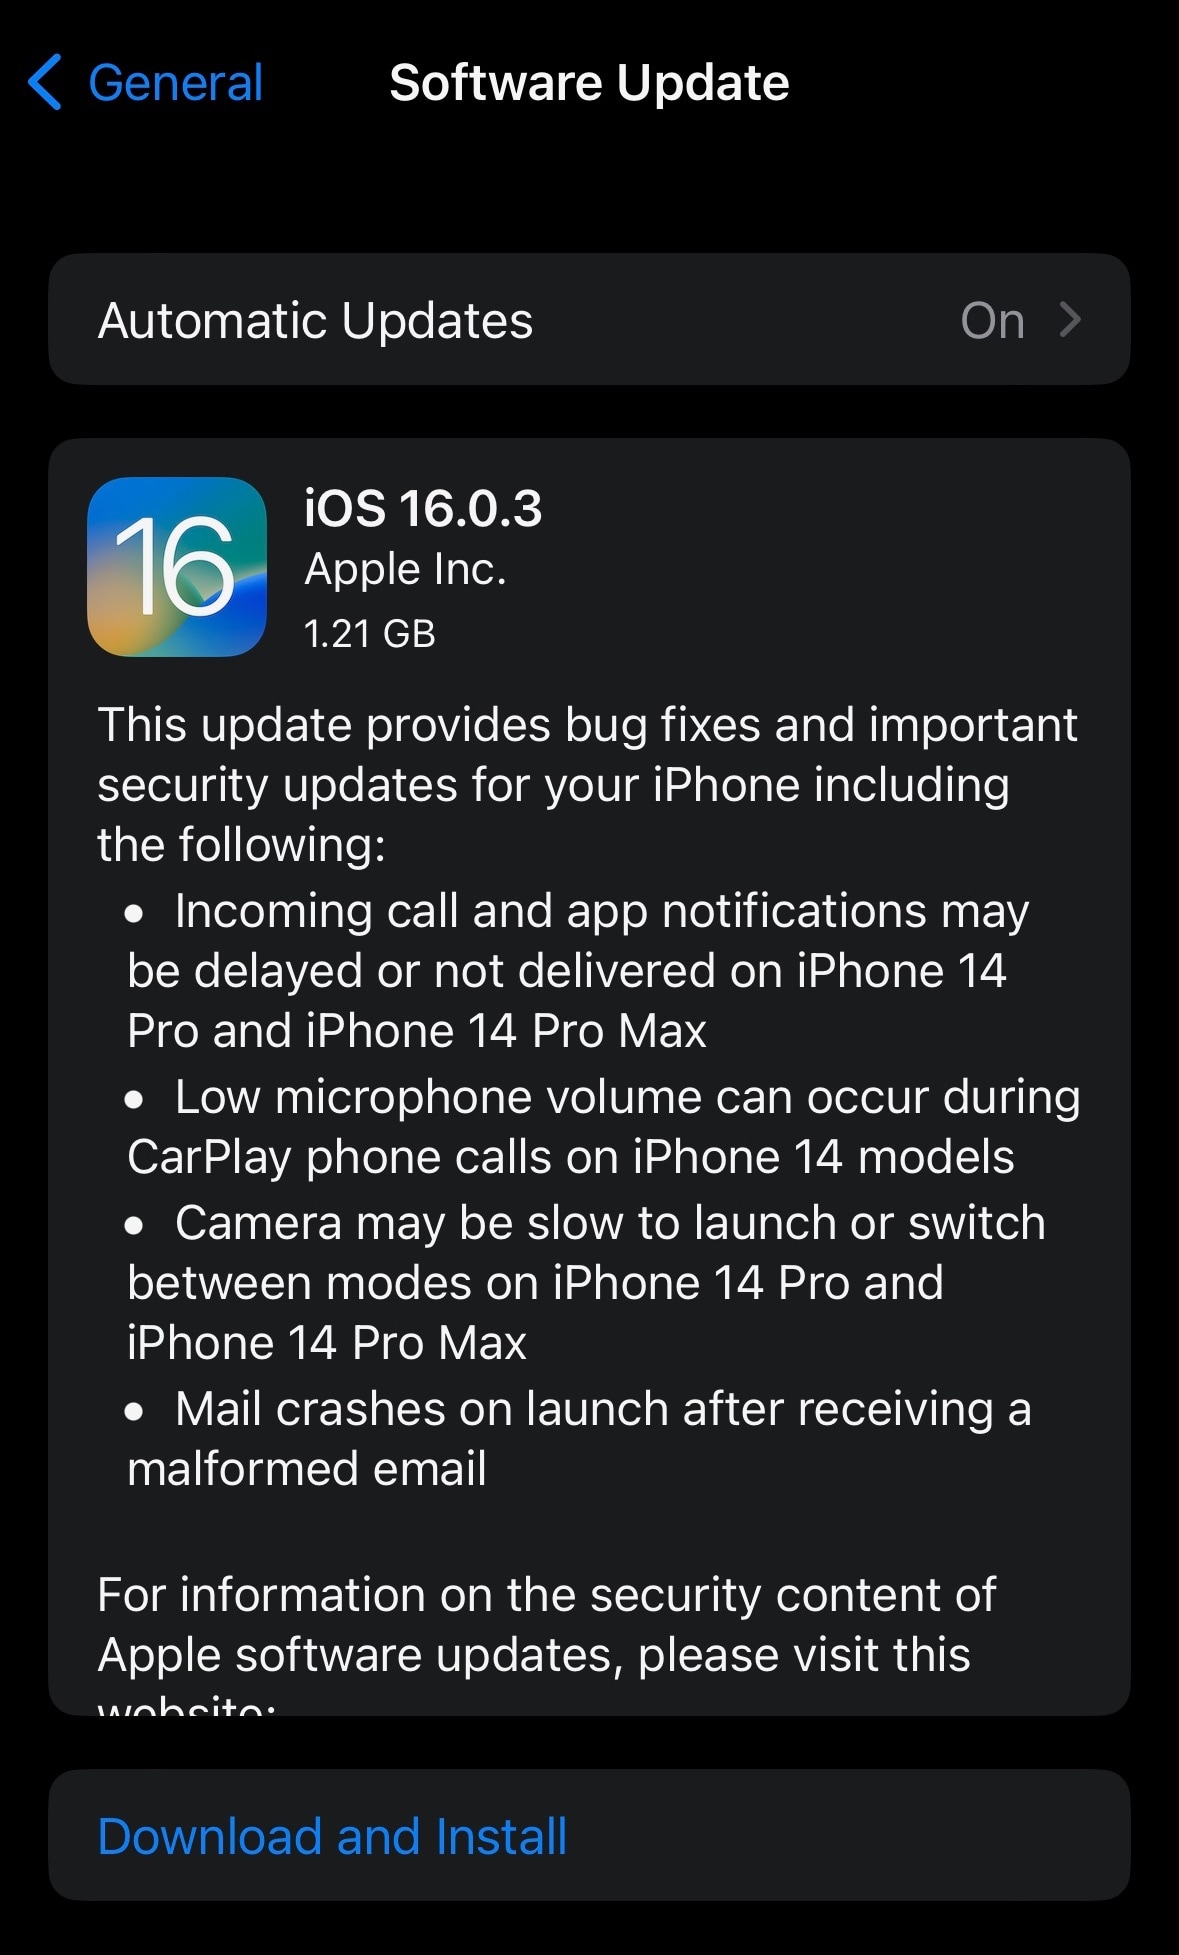 iOS 16.0.3 software update released.